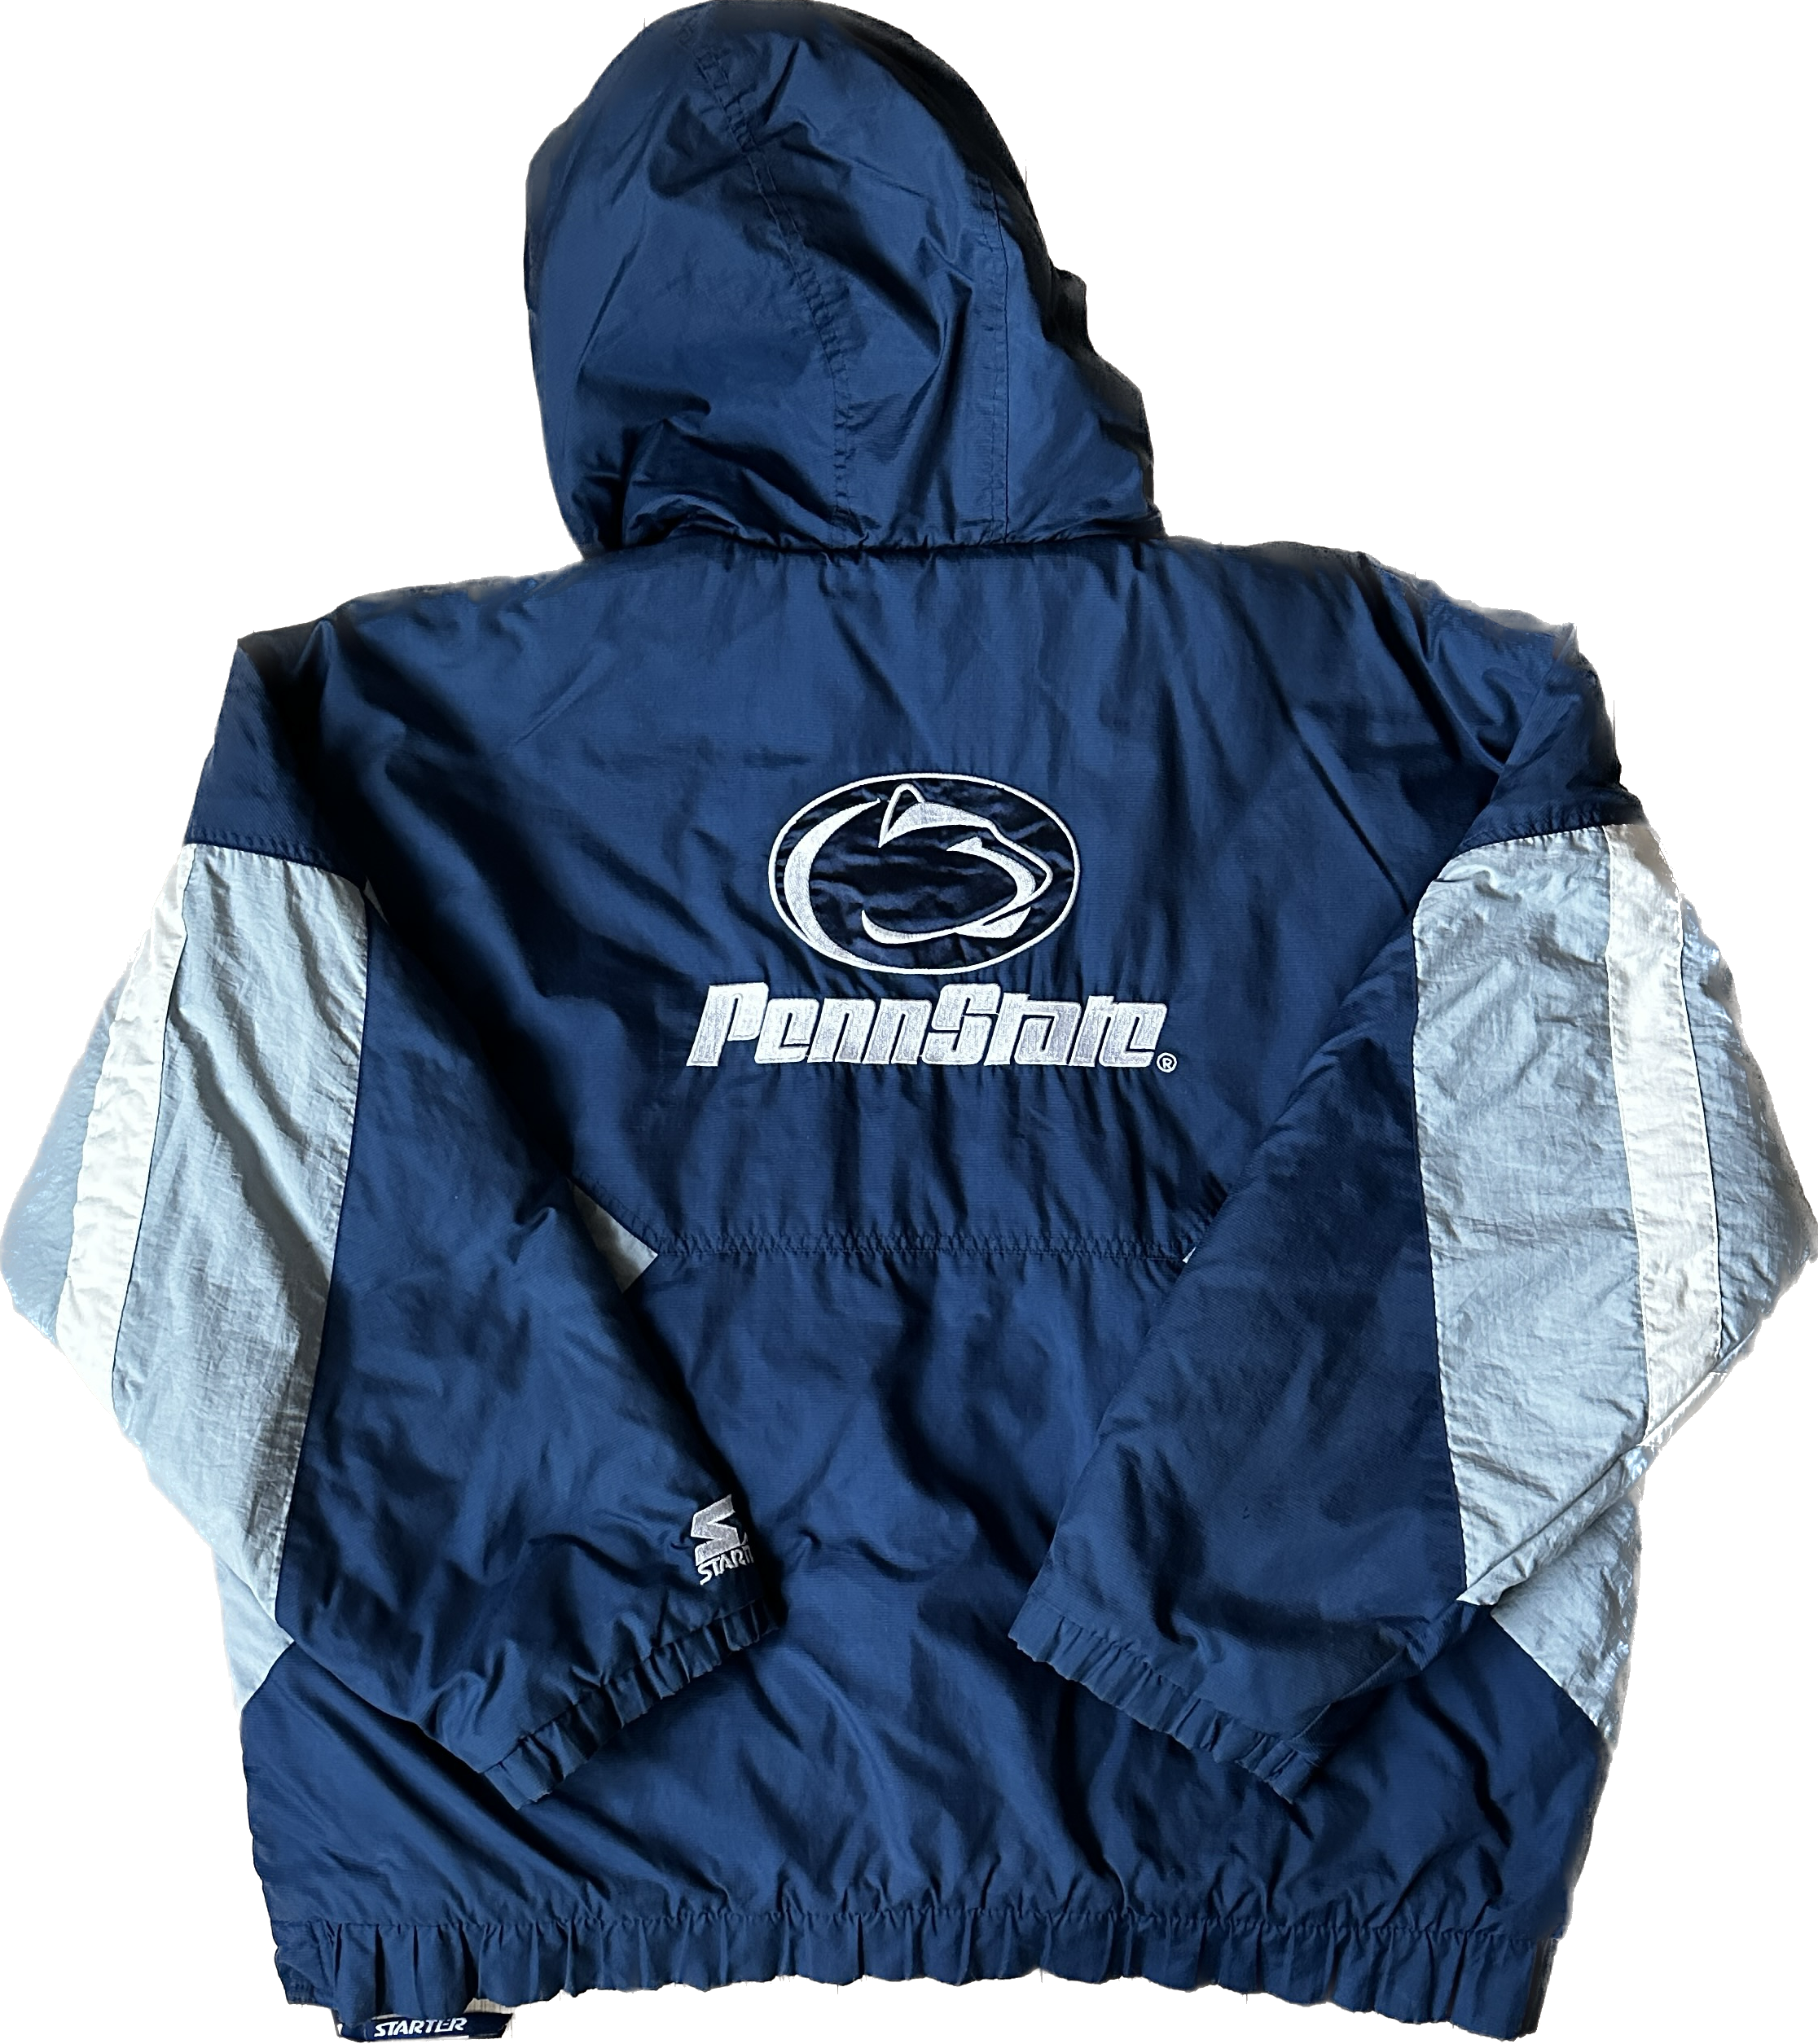 Vintage Penn State NCAA College Starter Jacket (XL)